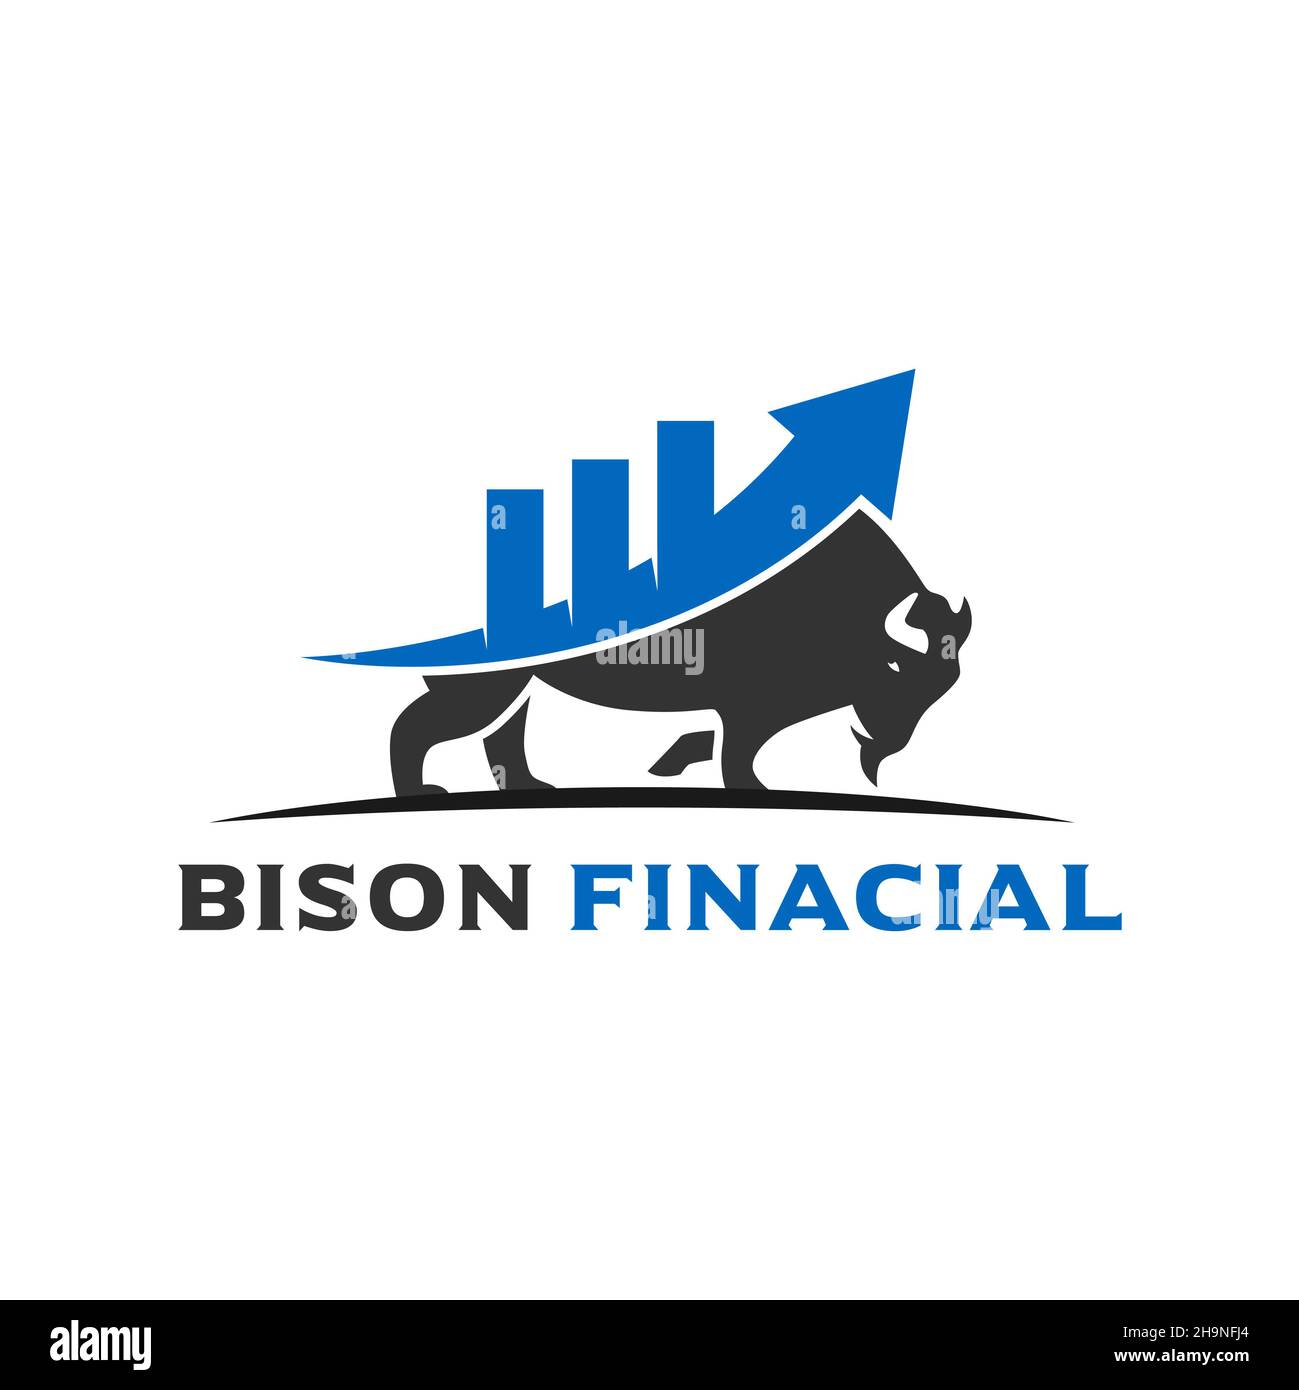 bison financial logo design template Stock Photo